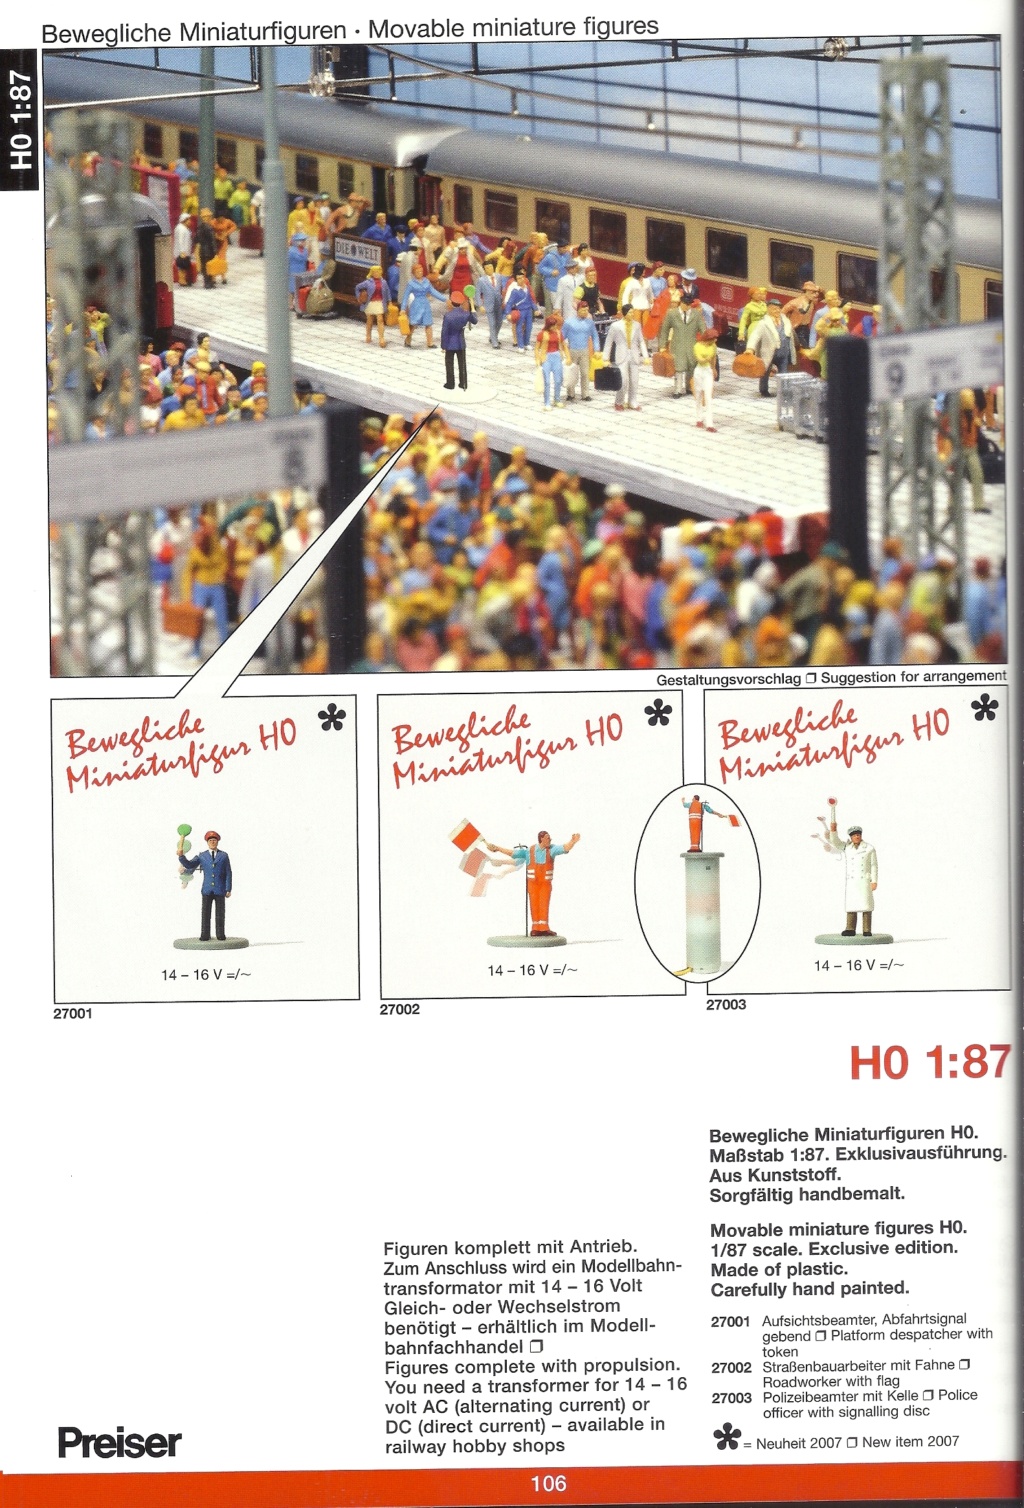 [PREISER 2007] Catalogue PK 24 2007 Preis751